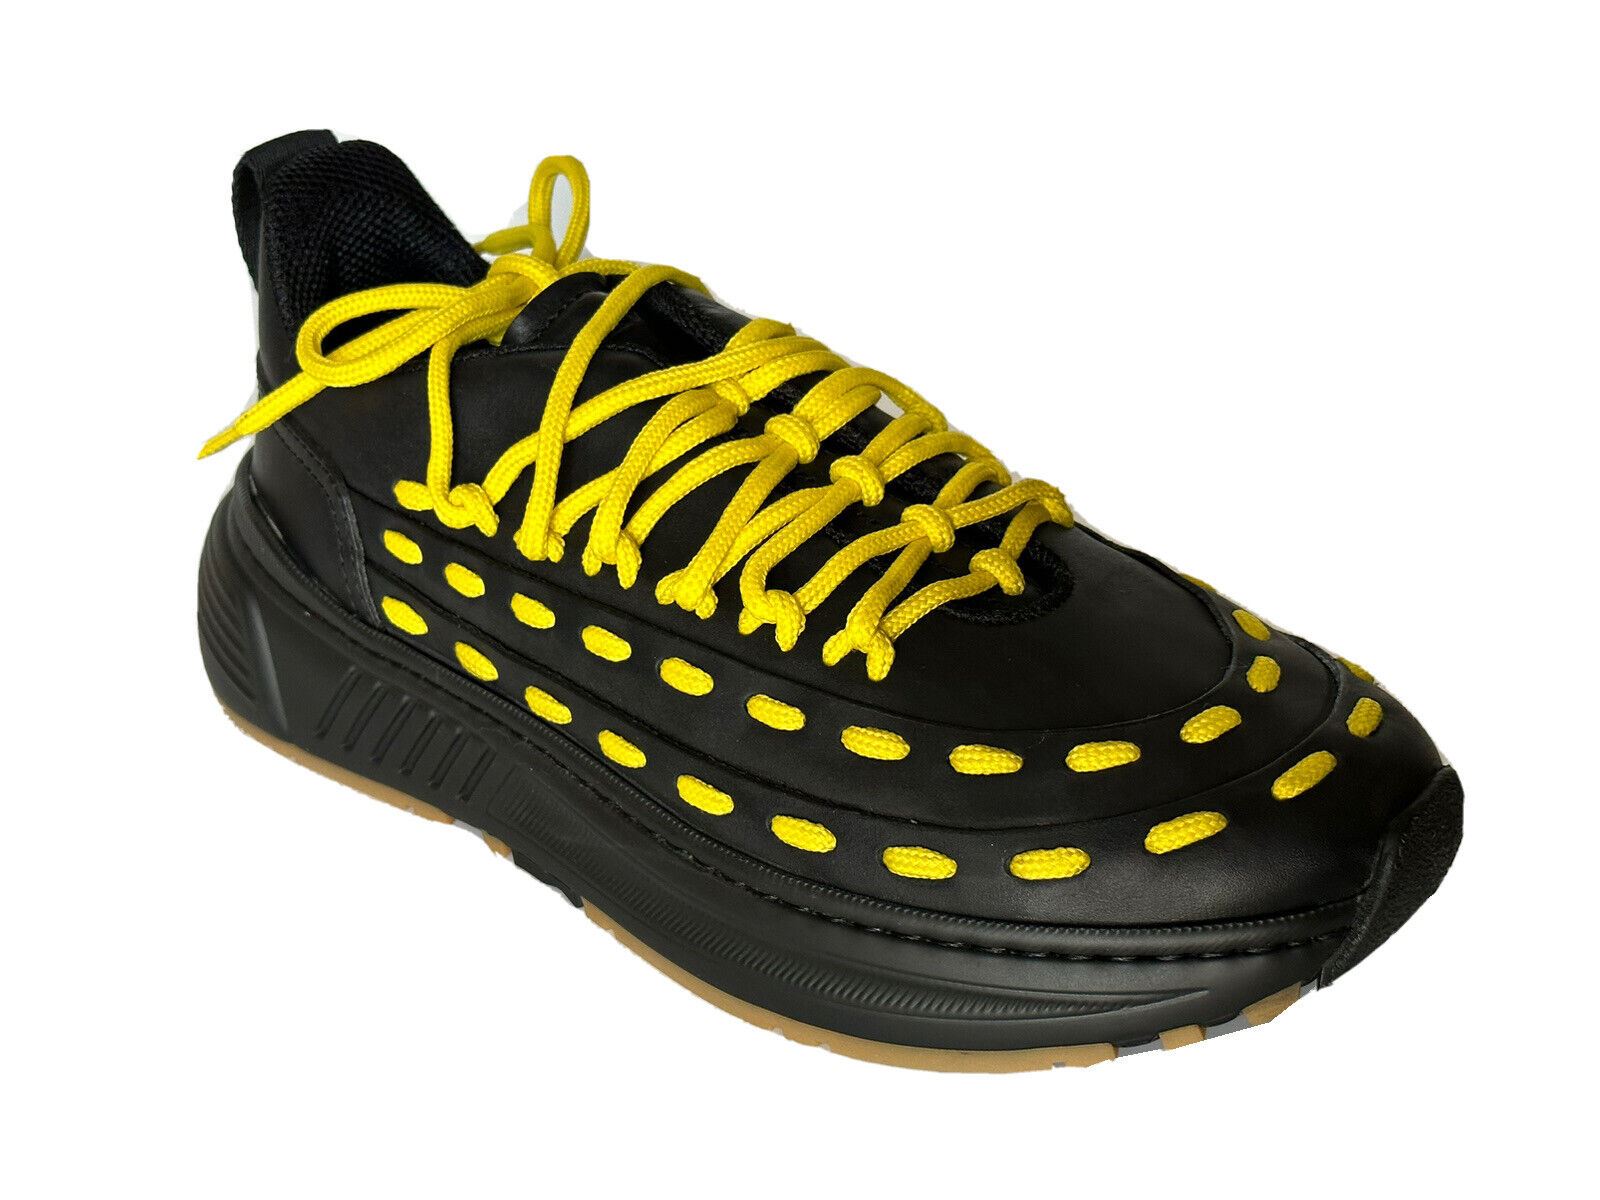 NIB $950 Bottega Veneta Mens Leather Black/Yellow Sneakers 8.5 US 578305 1013